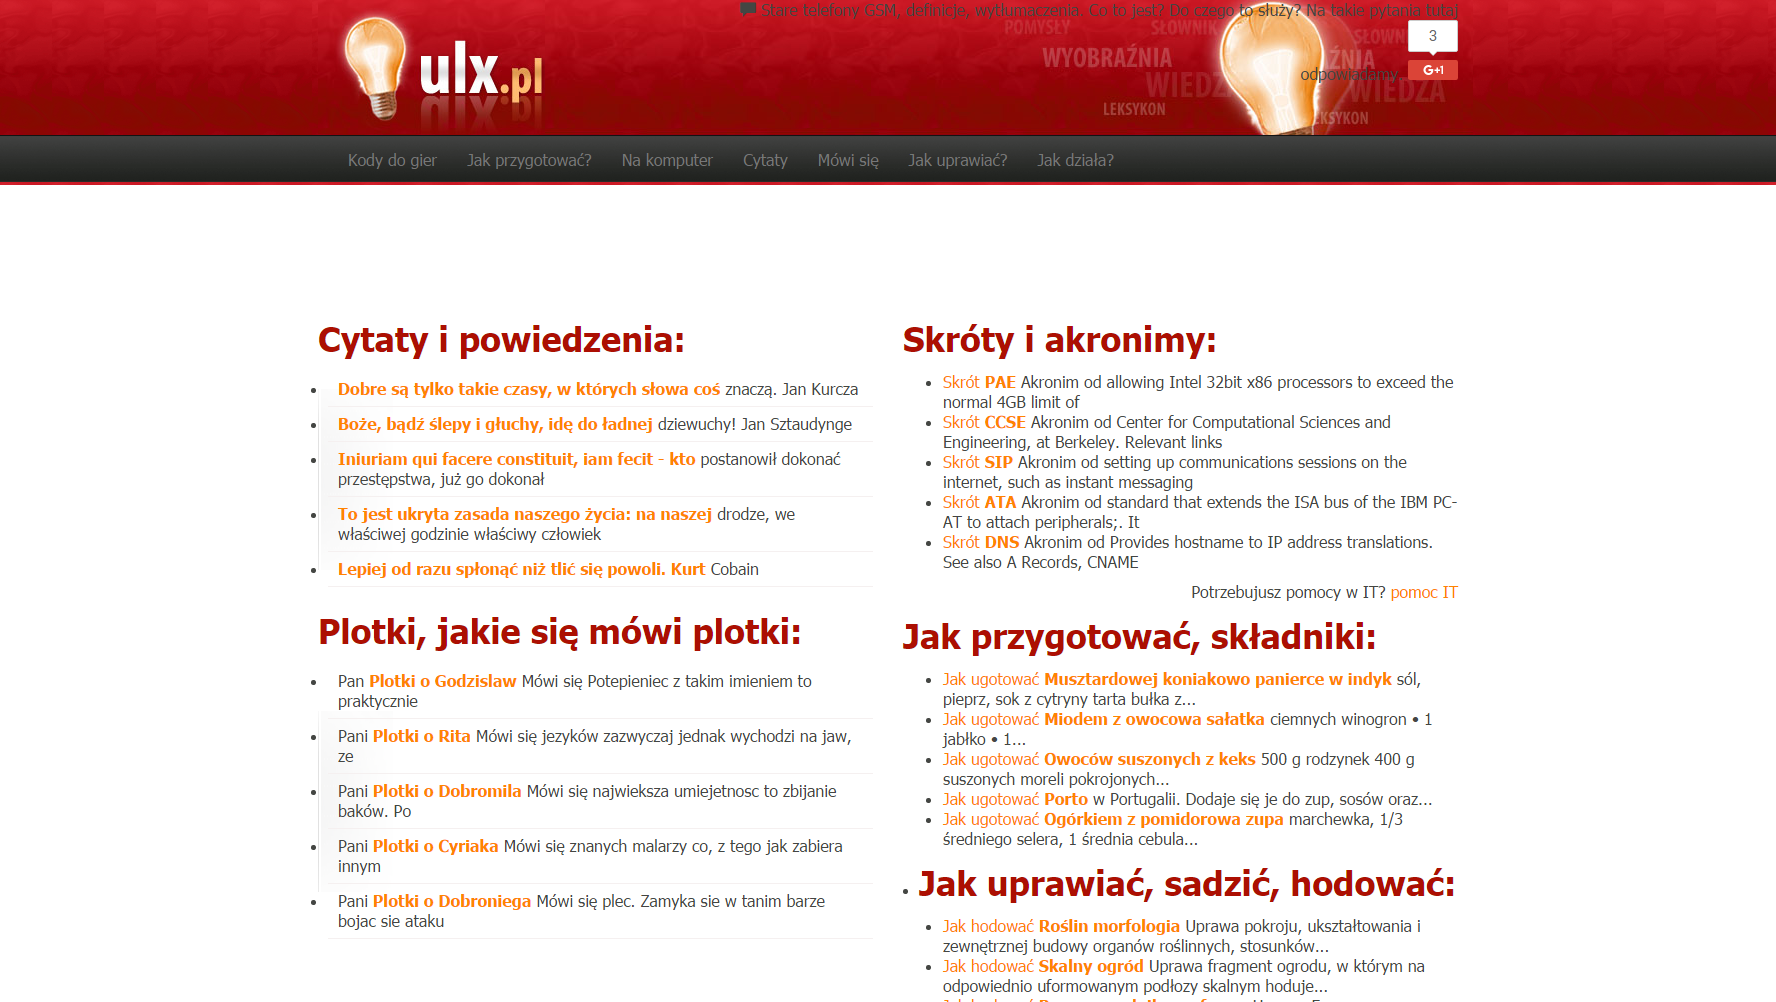 Proyecto ULX.pl